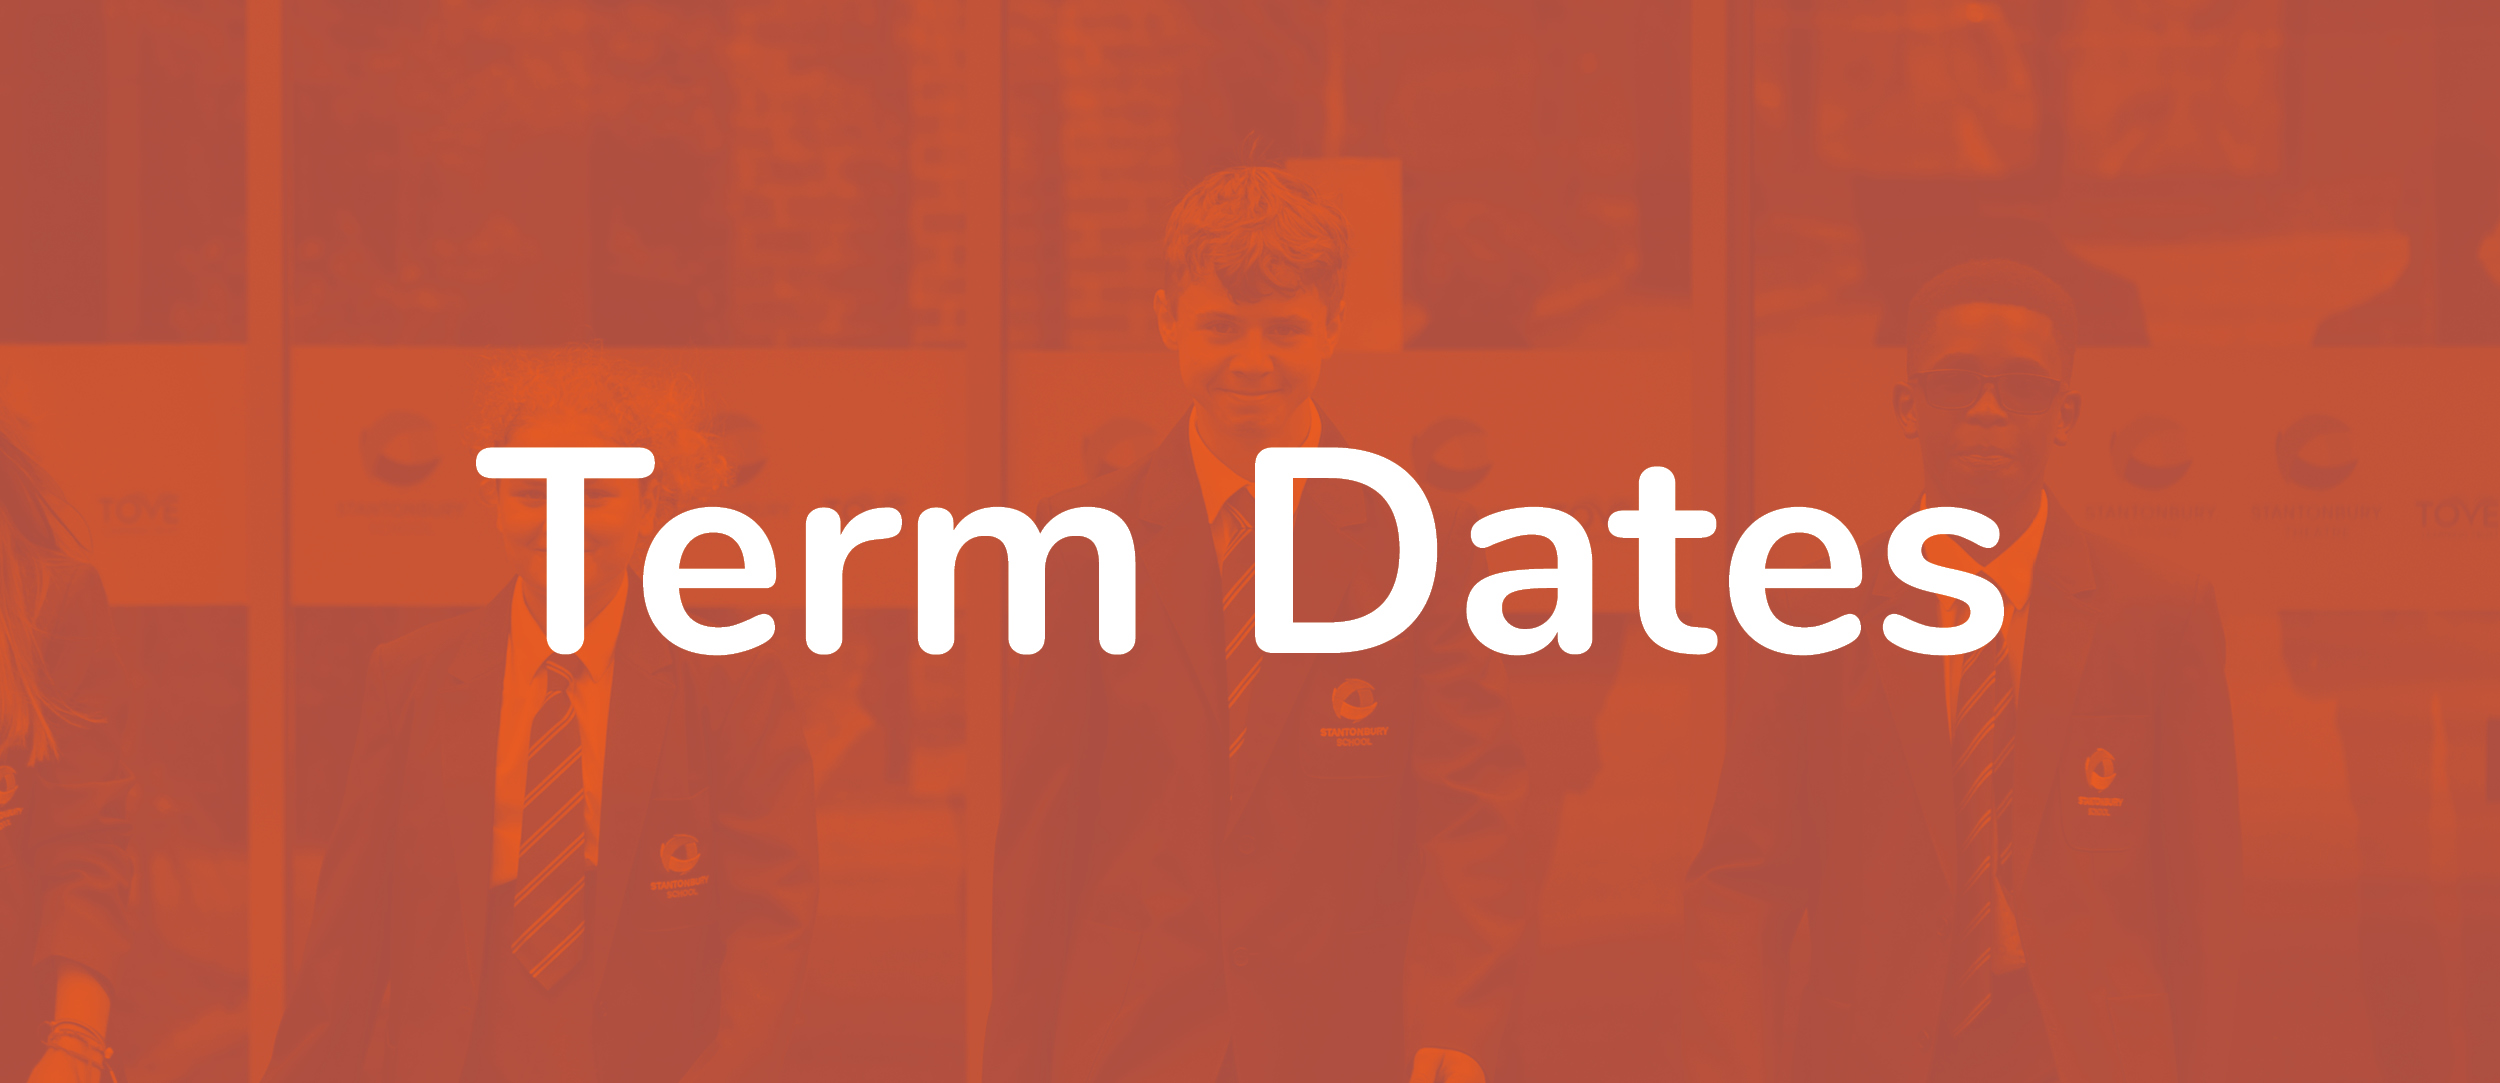 Term Dates Download